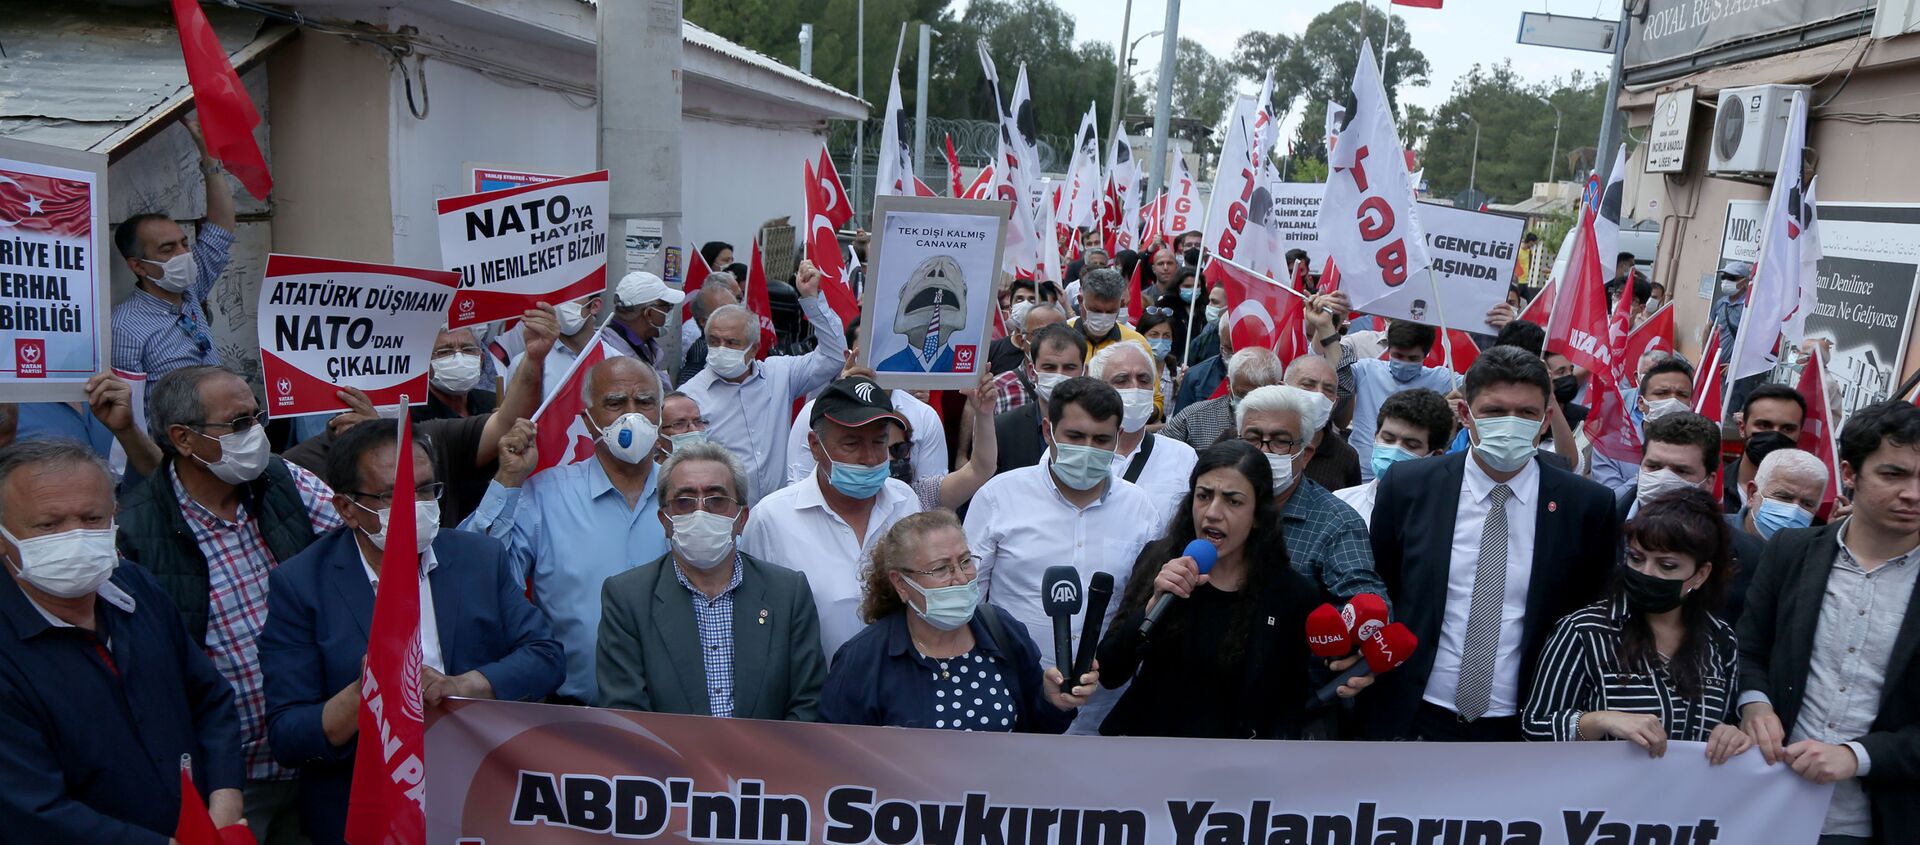 People protest outside Incirlik Air Base in Turkey, demanding to expel US troops stationed in it - Sputnik International, 1920, 27.04.2021